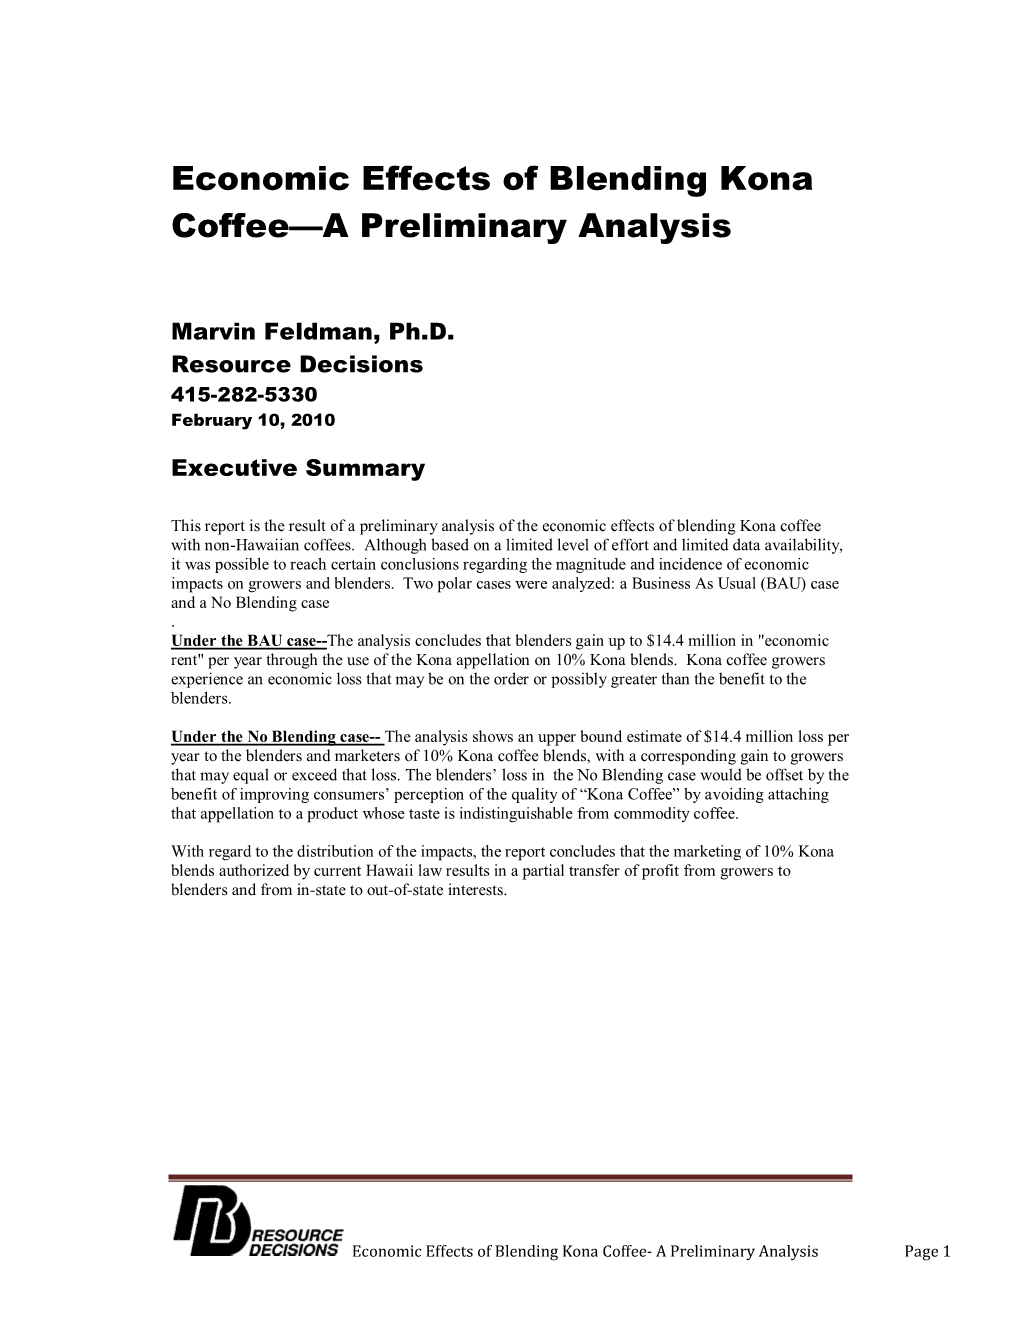 Economic Effects of Blending Kona Coffee—A Preliminary Analysis